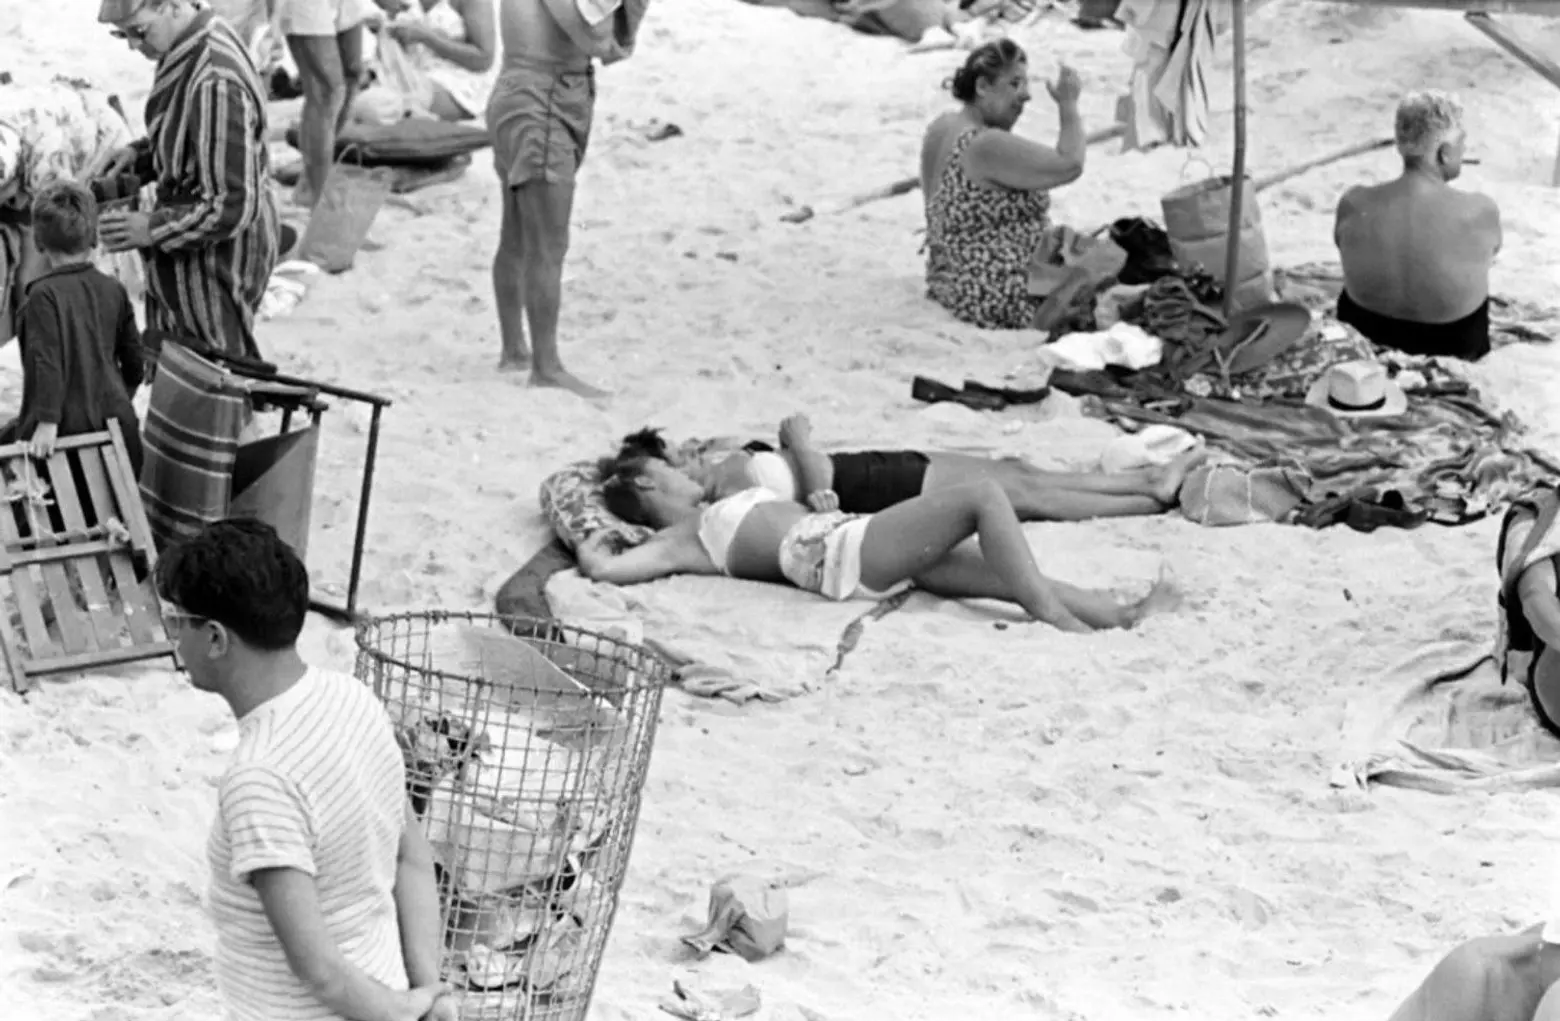 Rockaway Beach by Sam Shere, Sam Shere photography, indecent exposure tickets, Rockaway history